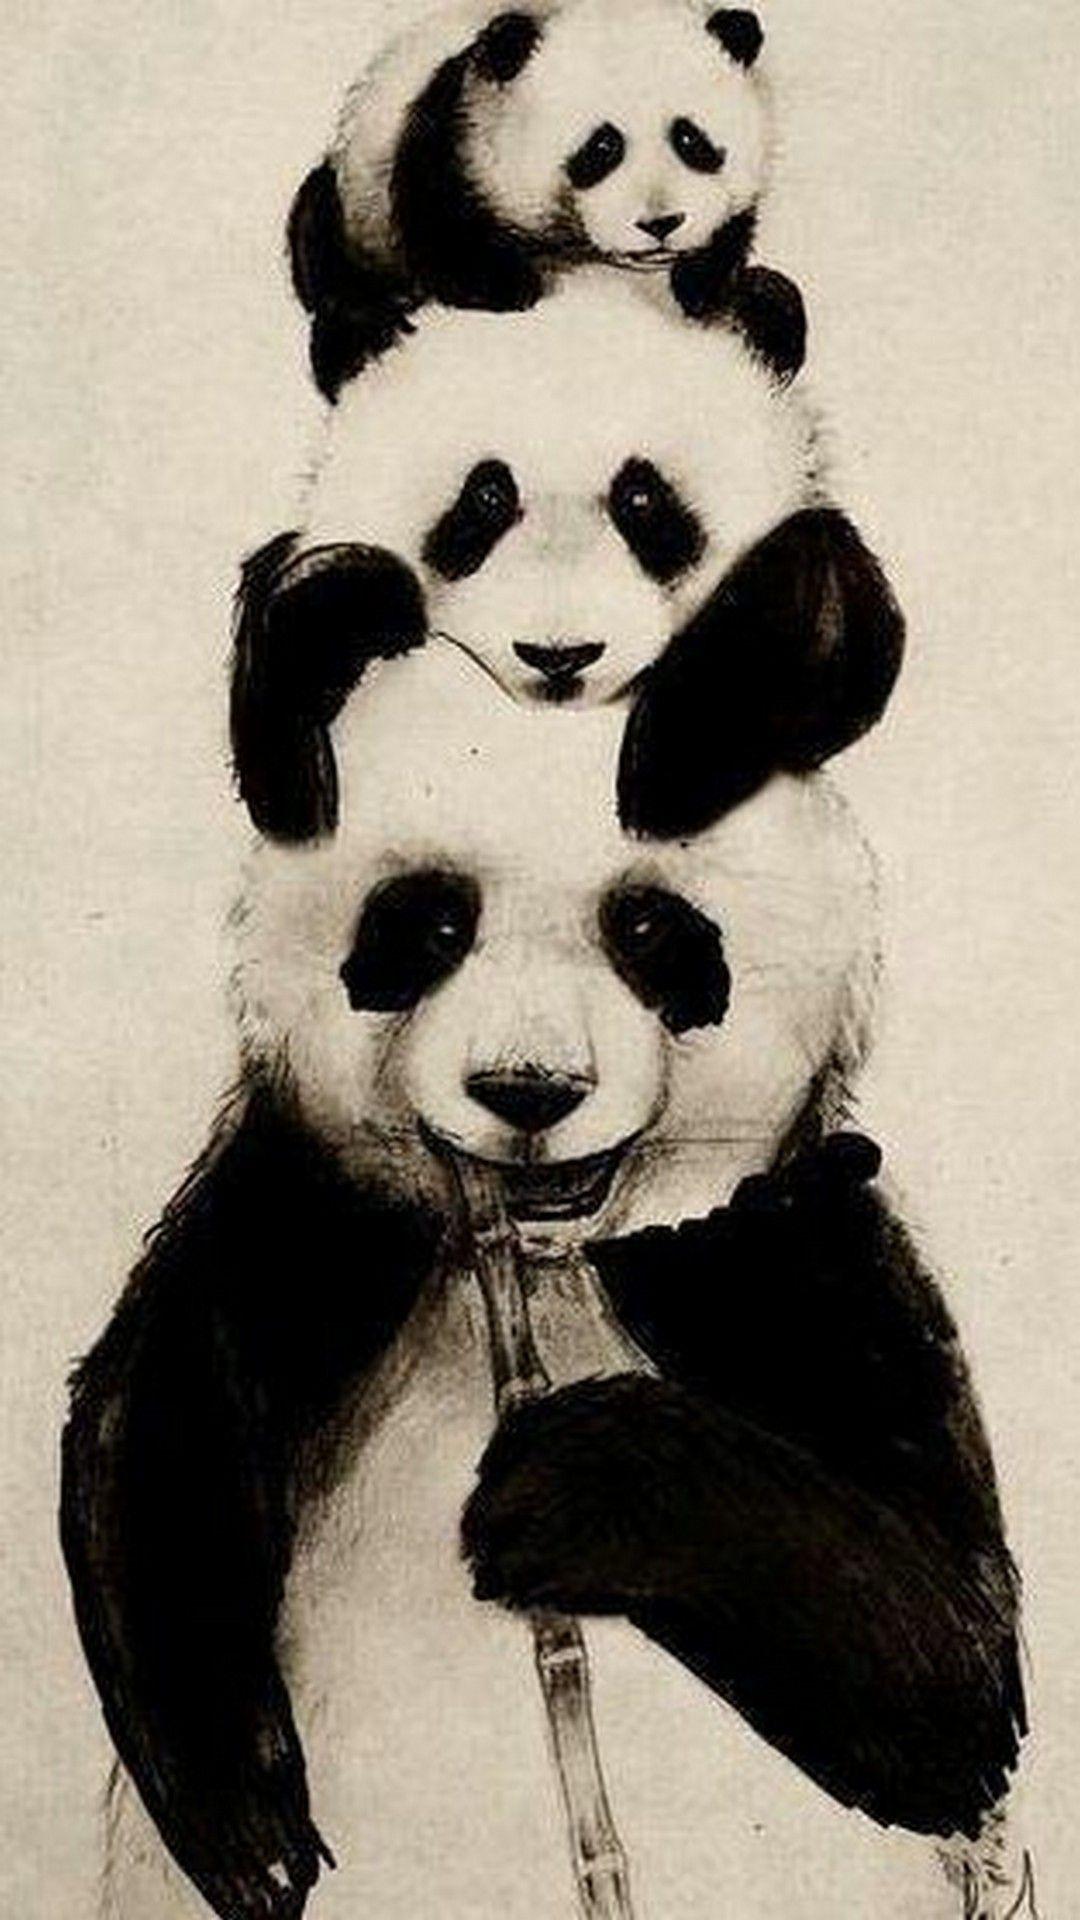 Drawing Panda Wallpapers - Top Free Drawing Panda Backgrounds